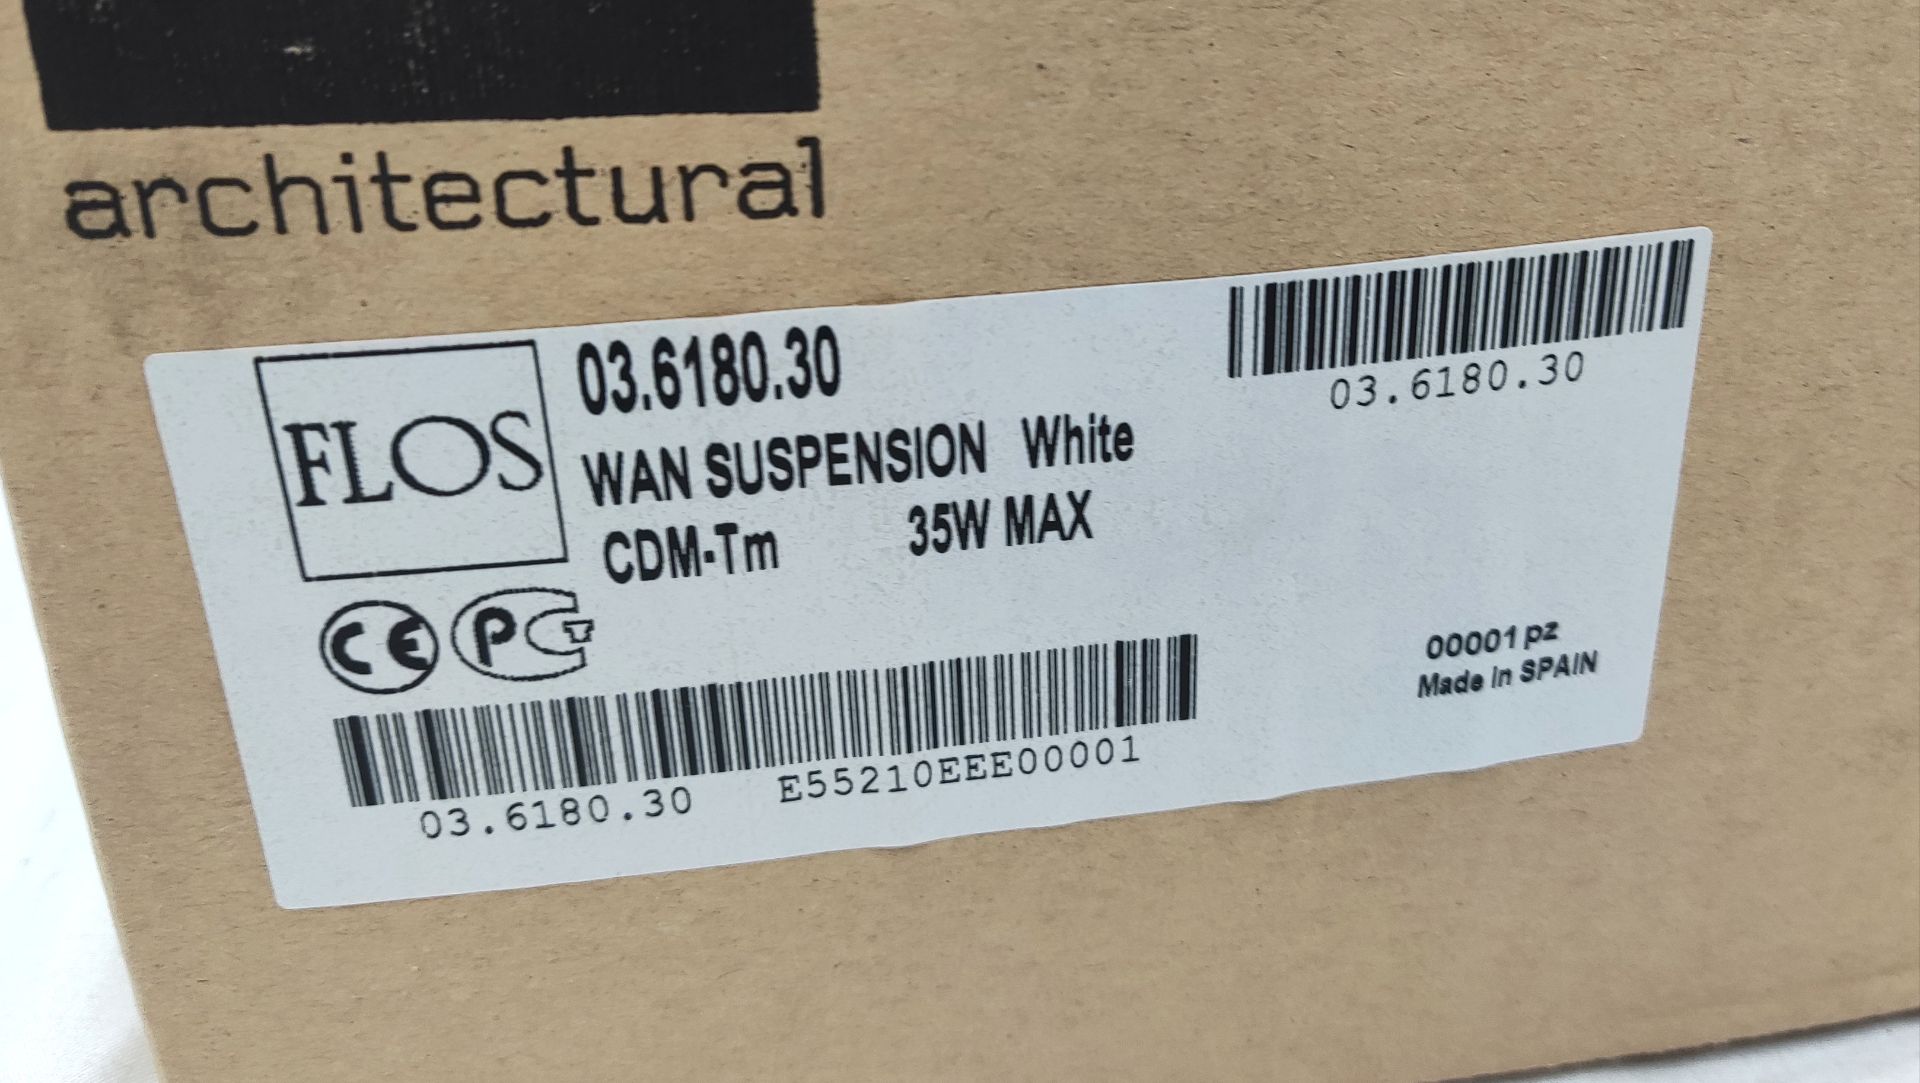 6 x FLOS Wan Suspension Light In White - Cdm-Tm - Model 03.6180.30 - RRP £954 - Ref: ATR143/2-6/ - Image 10 of 26